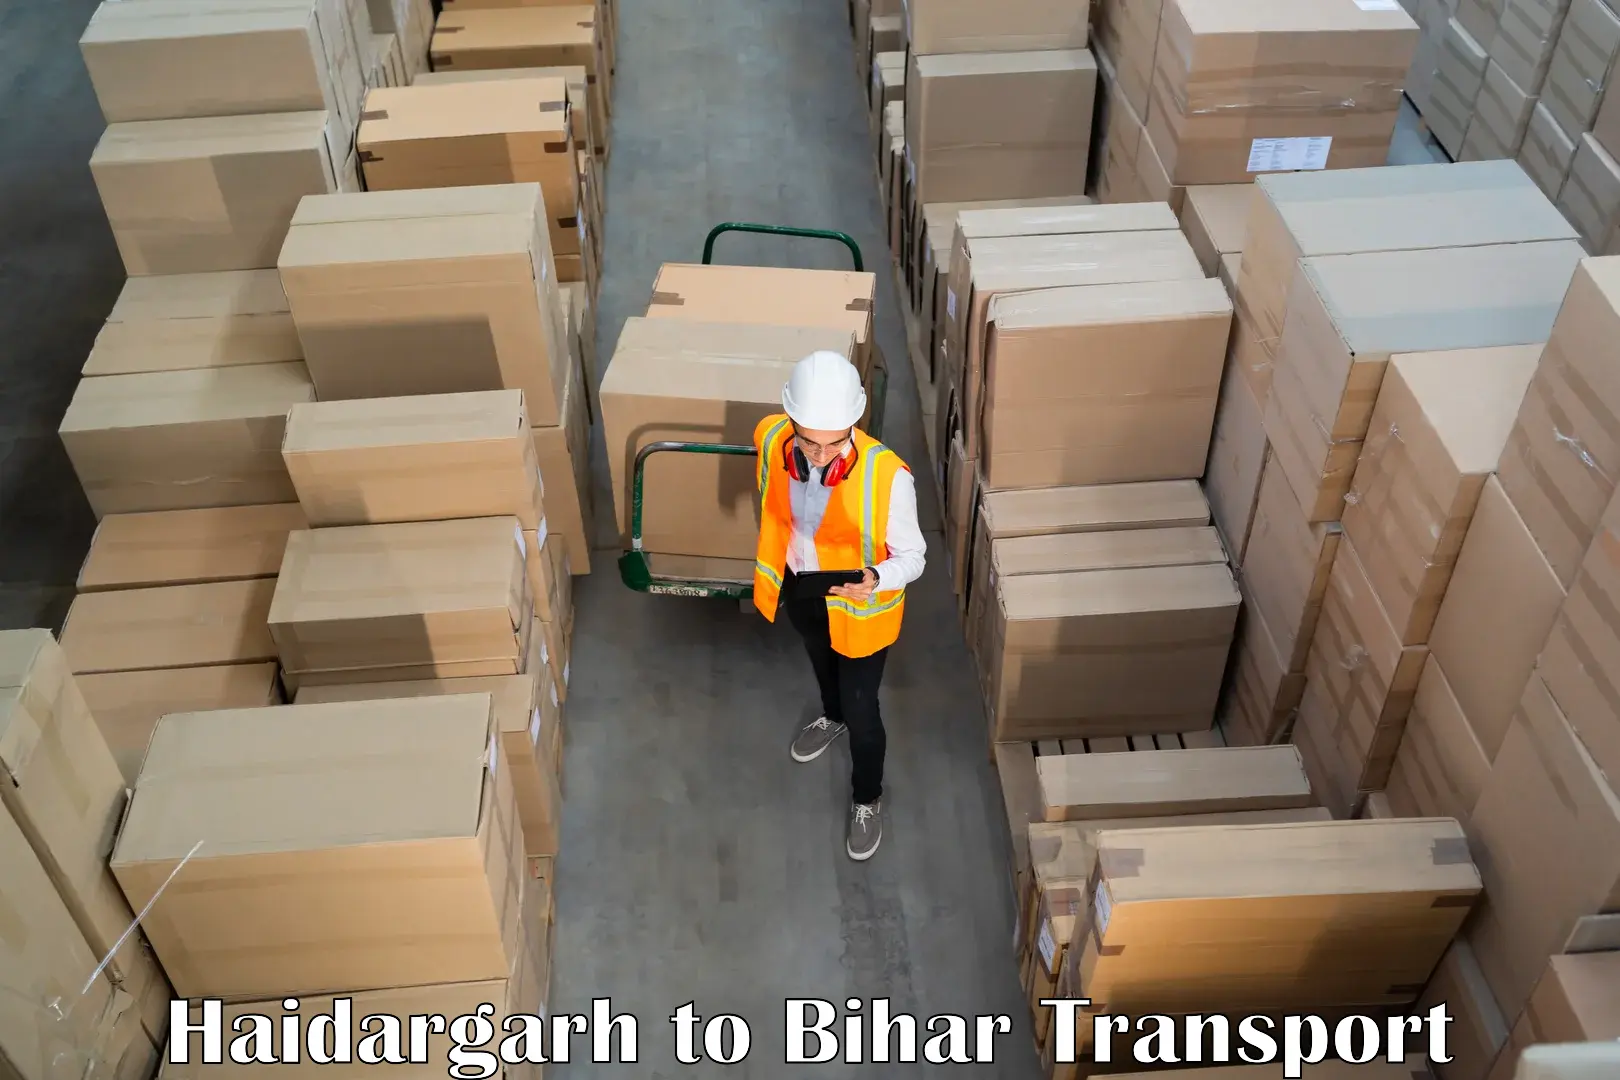 Part load transport service in India Haidargarh to Hasanpura